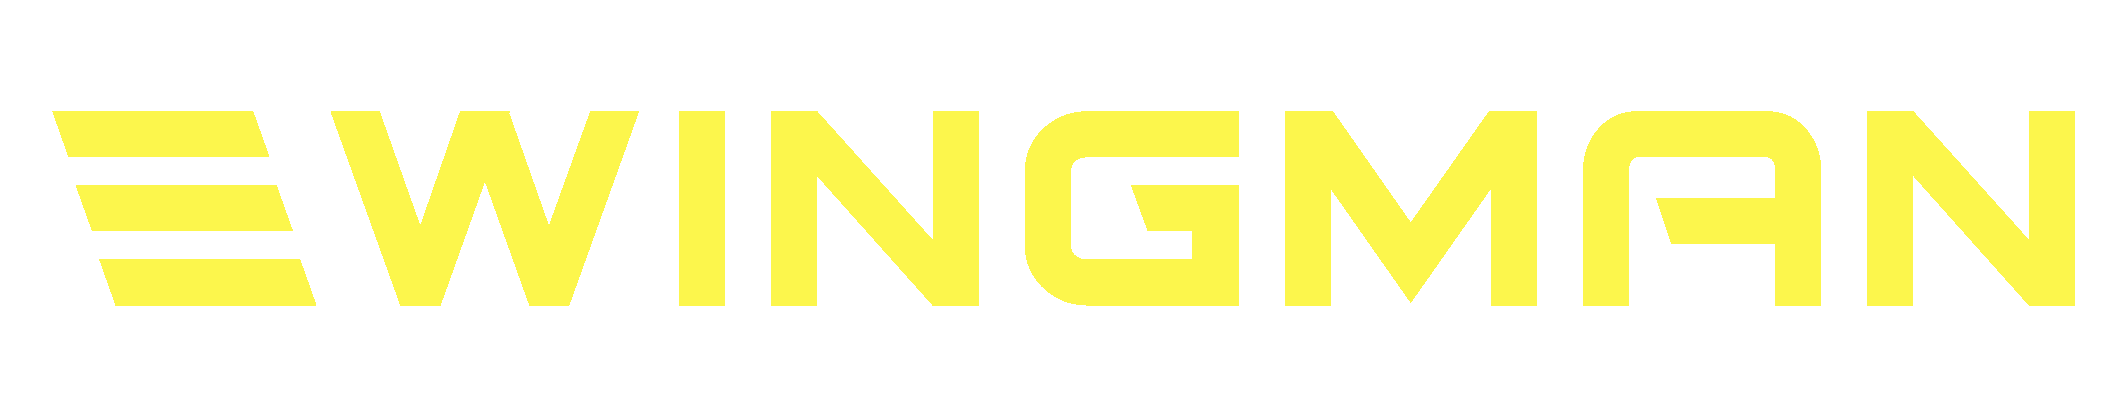 Wingman Multisport Coaching Logo Yellowpng